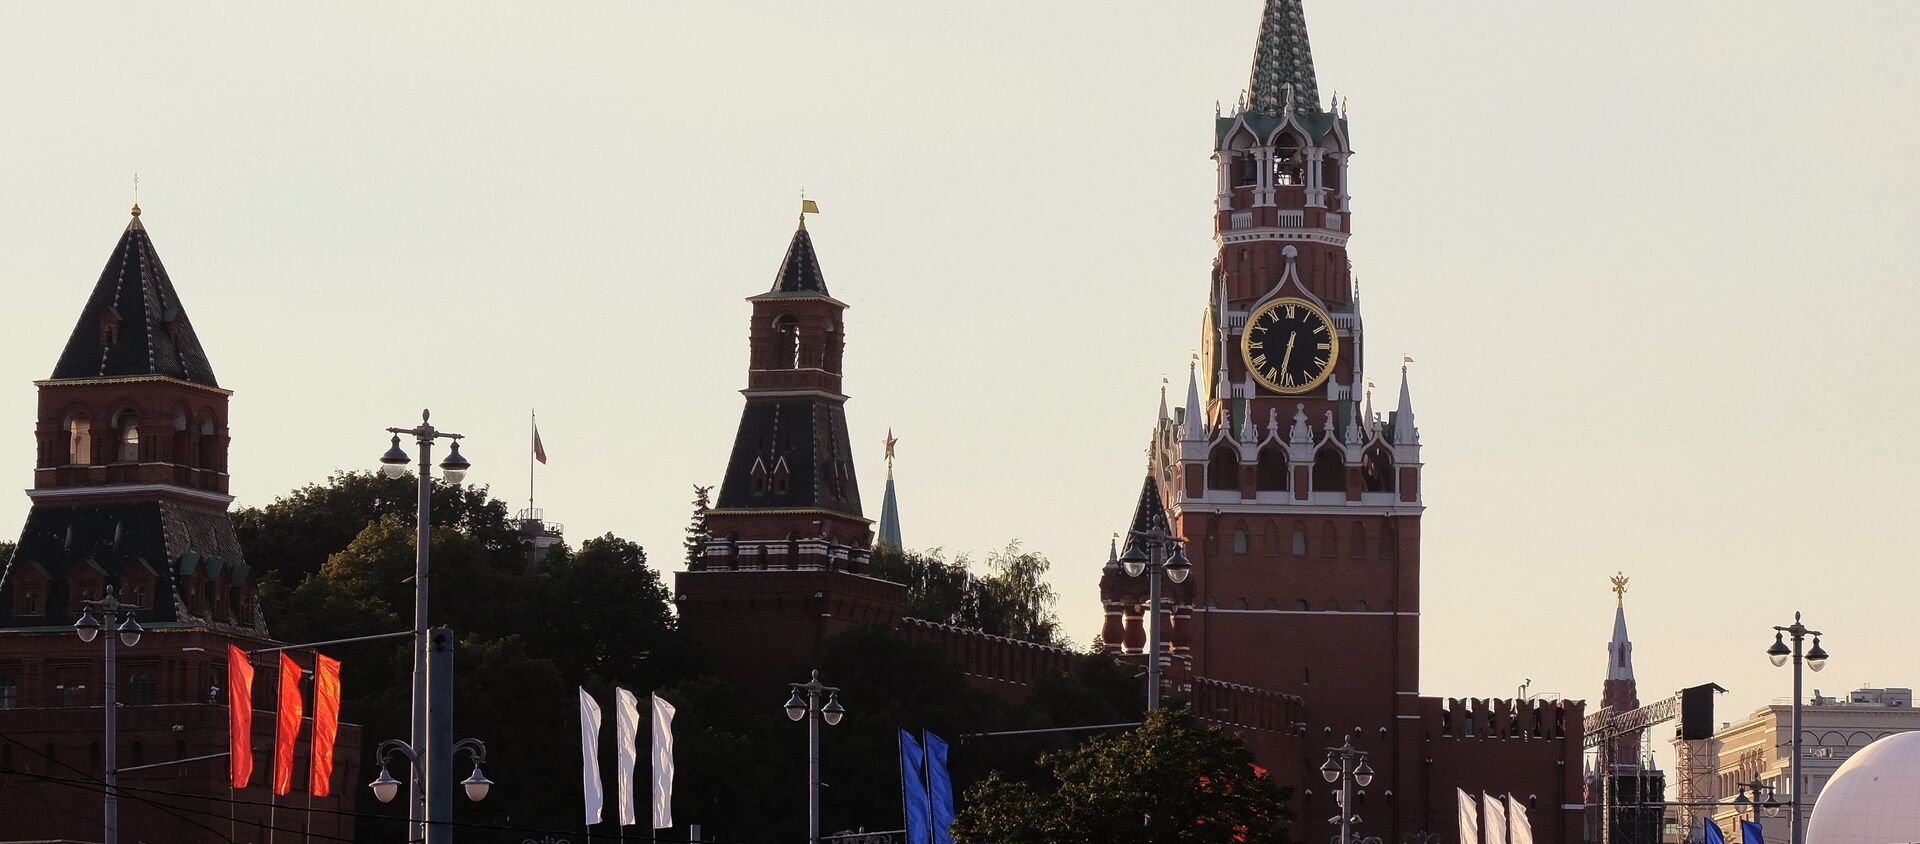 The Moscow Kremlin towers. (File) - Sputnik International, 1920, 17.05.2017